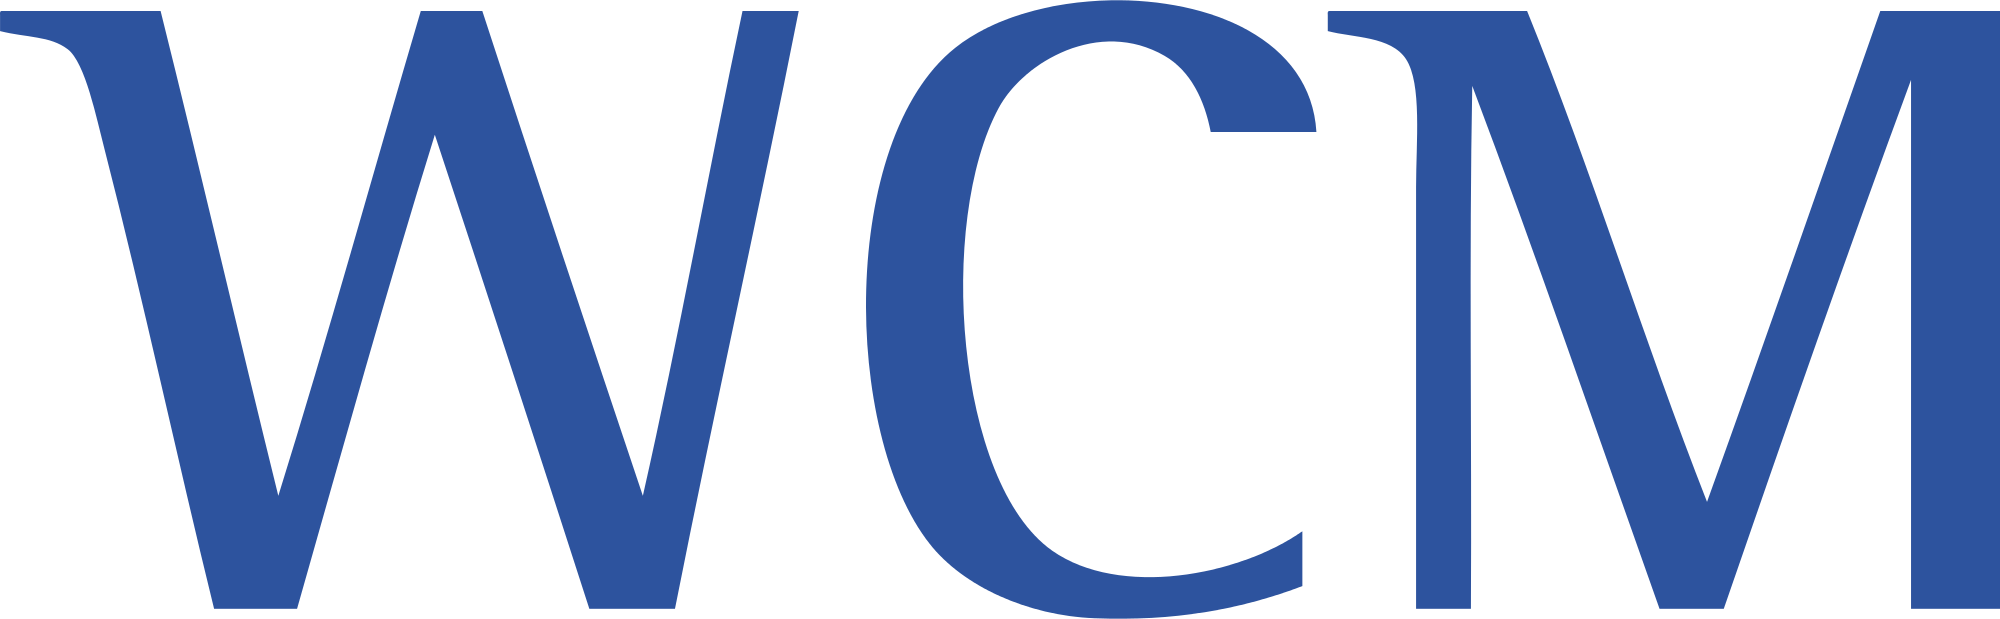 WCM Logo - WCM AG - TLG IMMOBILIEN AG